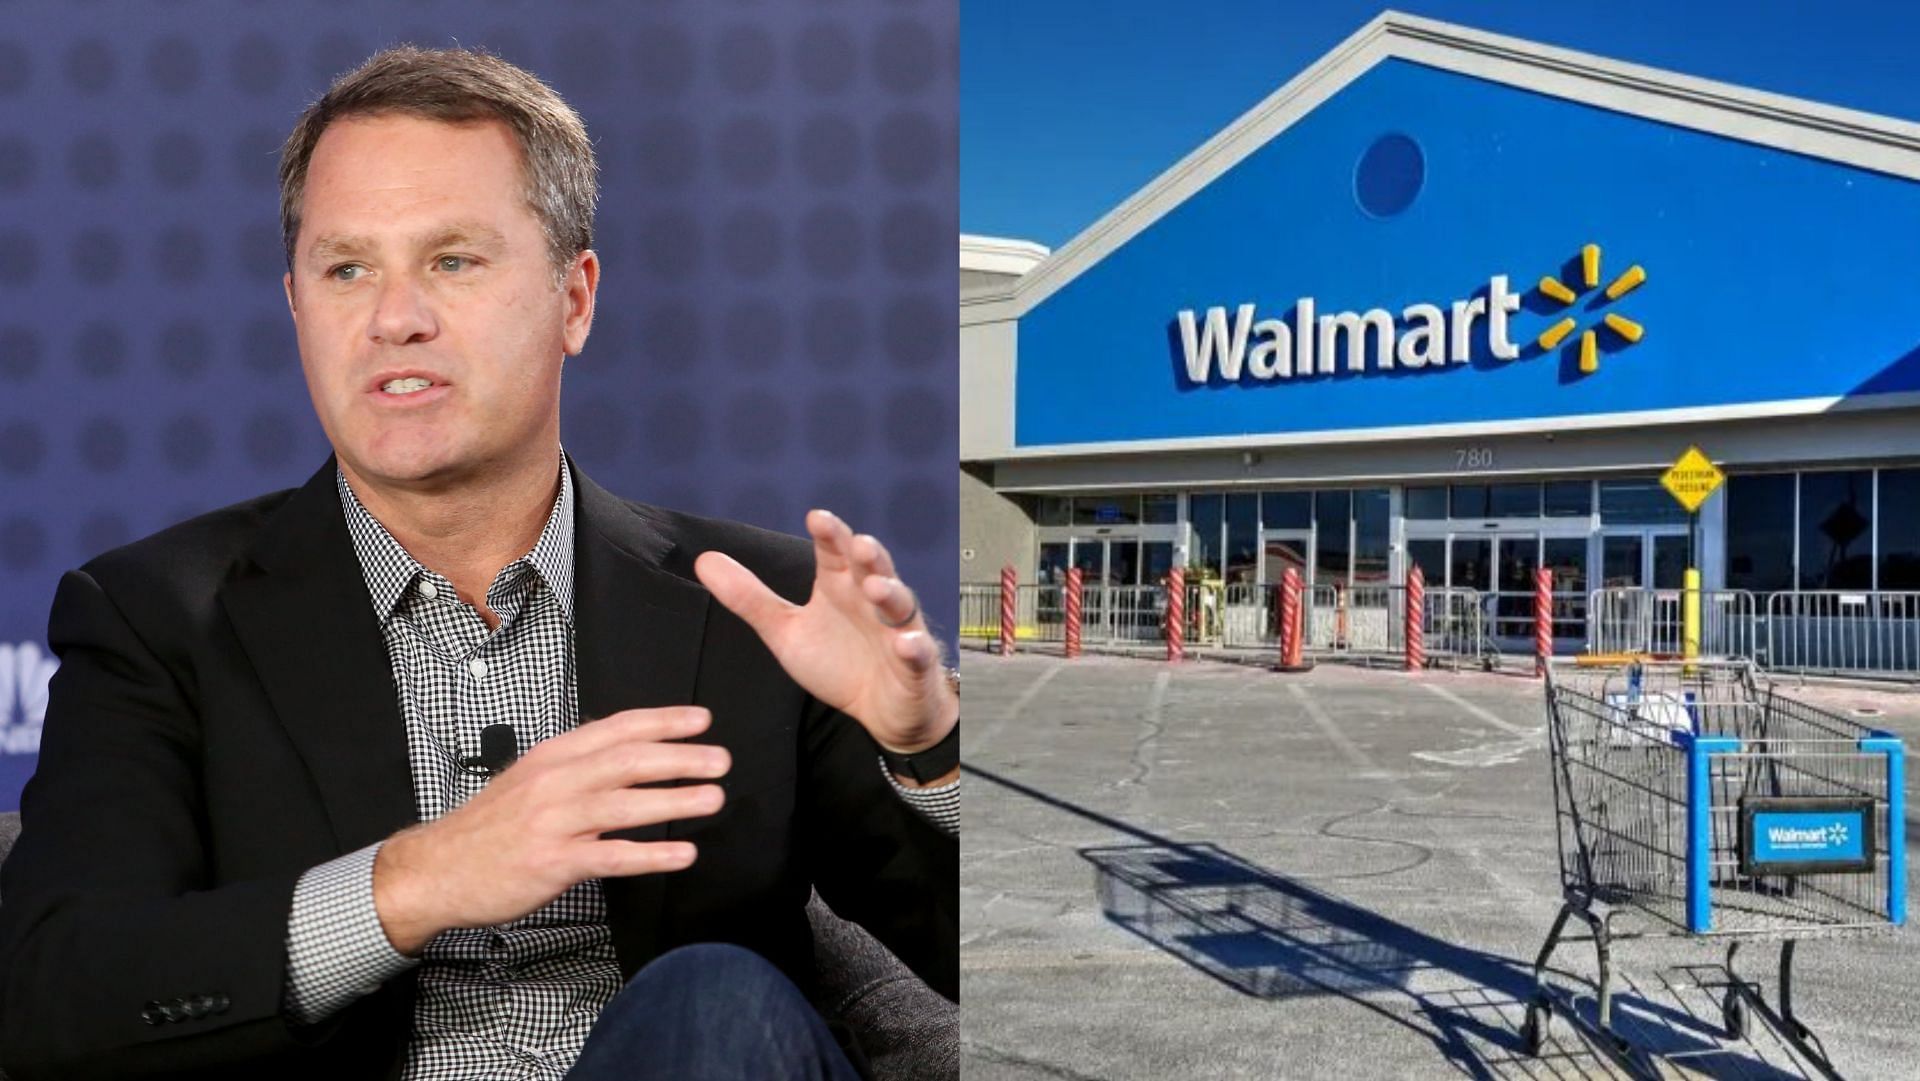 Walmart CEO Doug McMillon announces possible shutdown of stores, gets backlash online. (Image via Shutterstock)